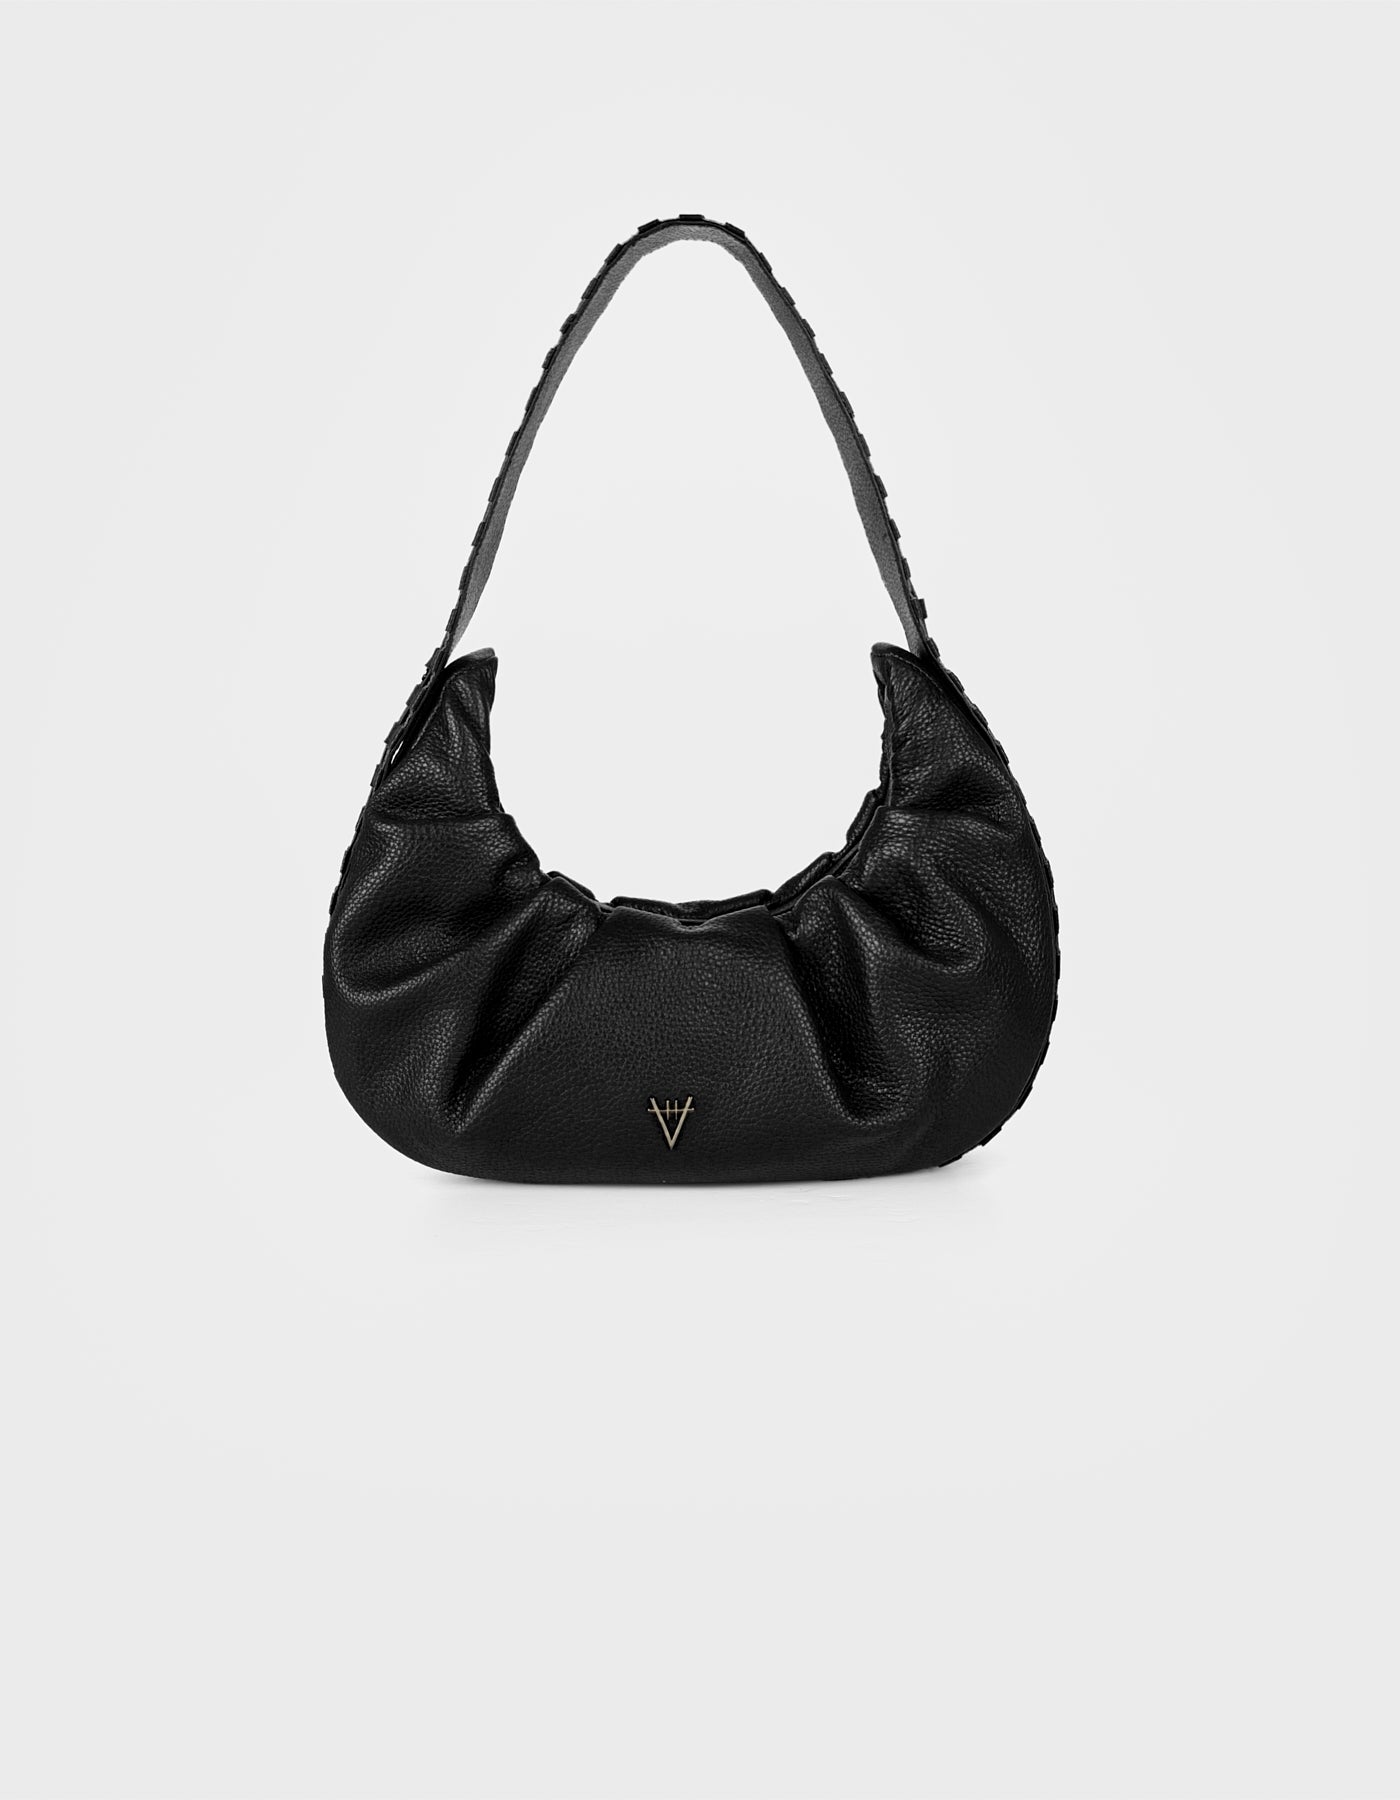 HiVa Atelier - Croissant Bag Black